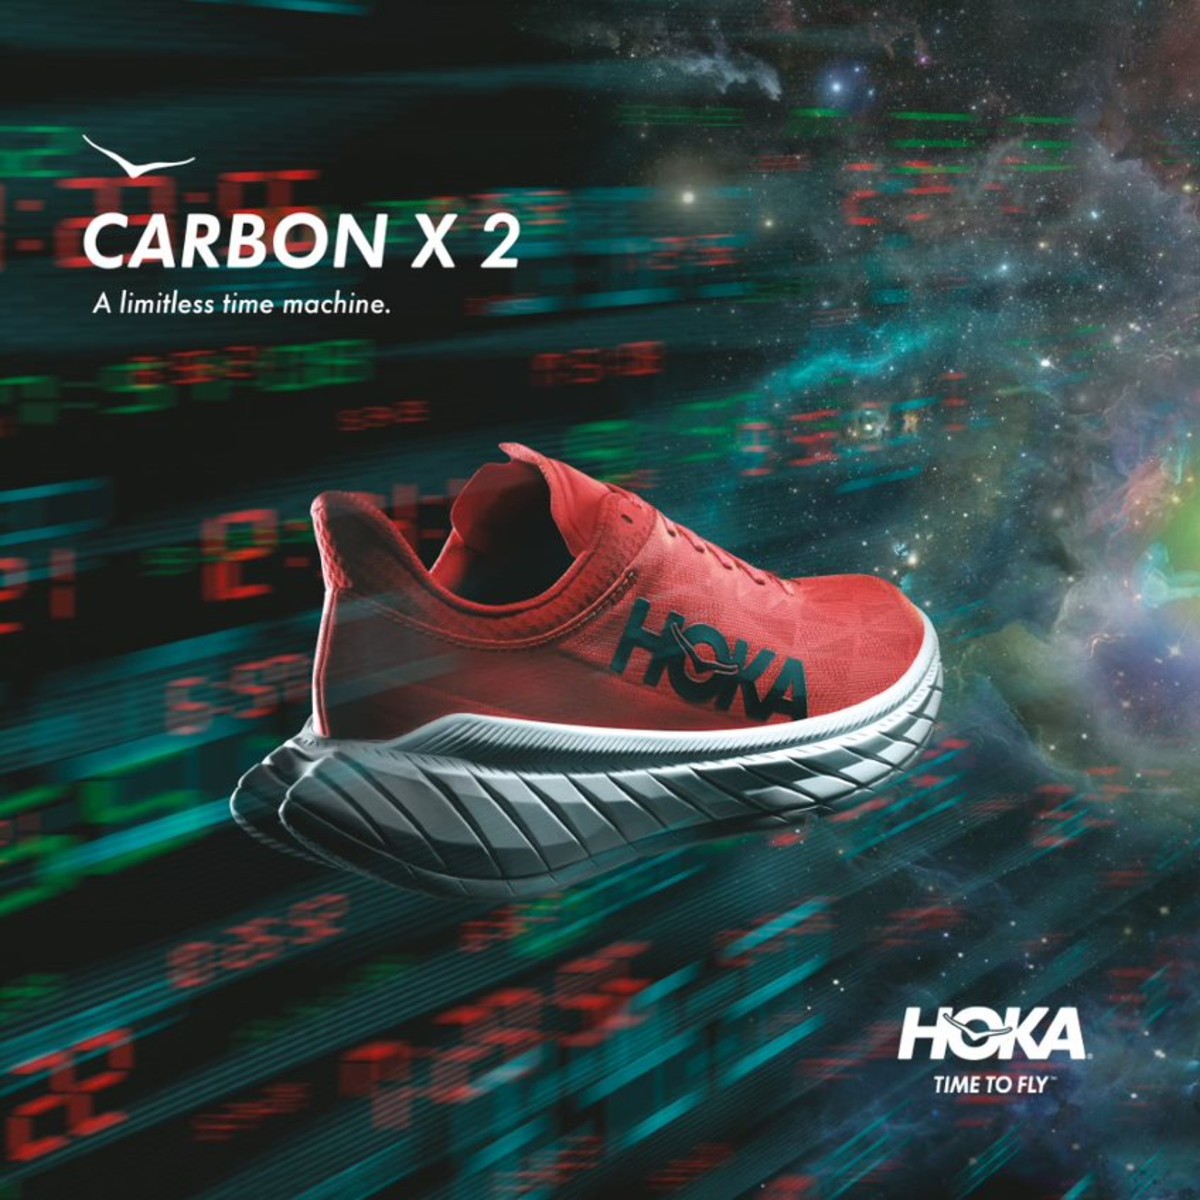 HOKA ONE ONE Carbon X 2